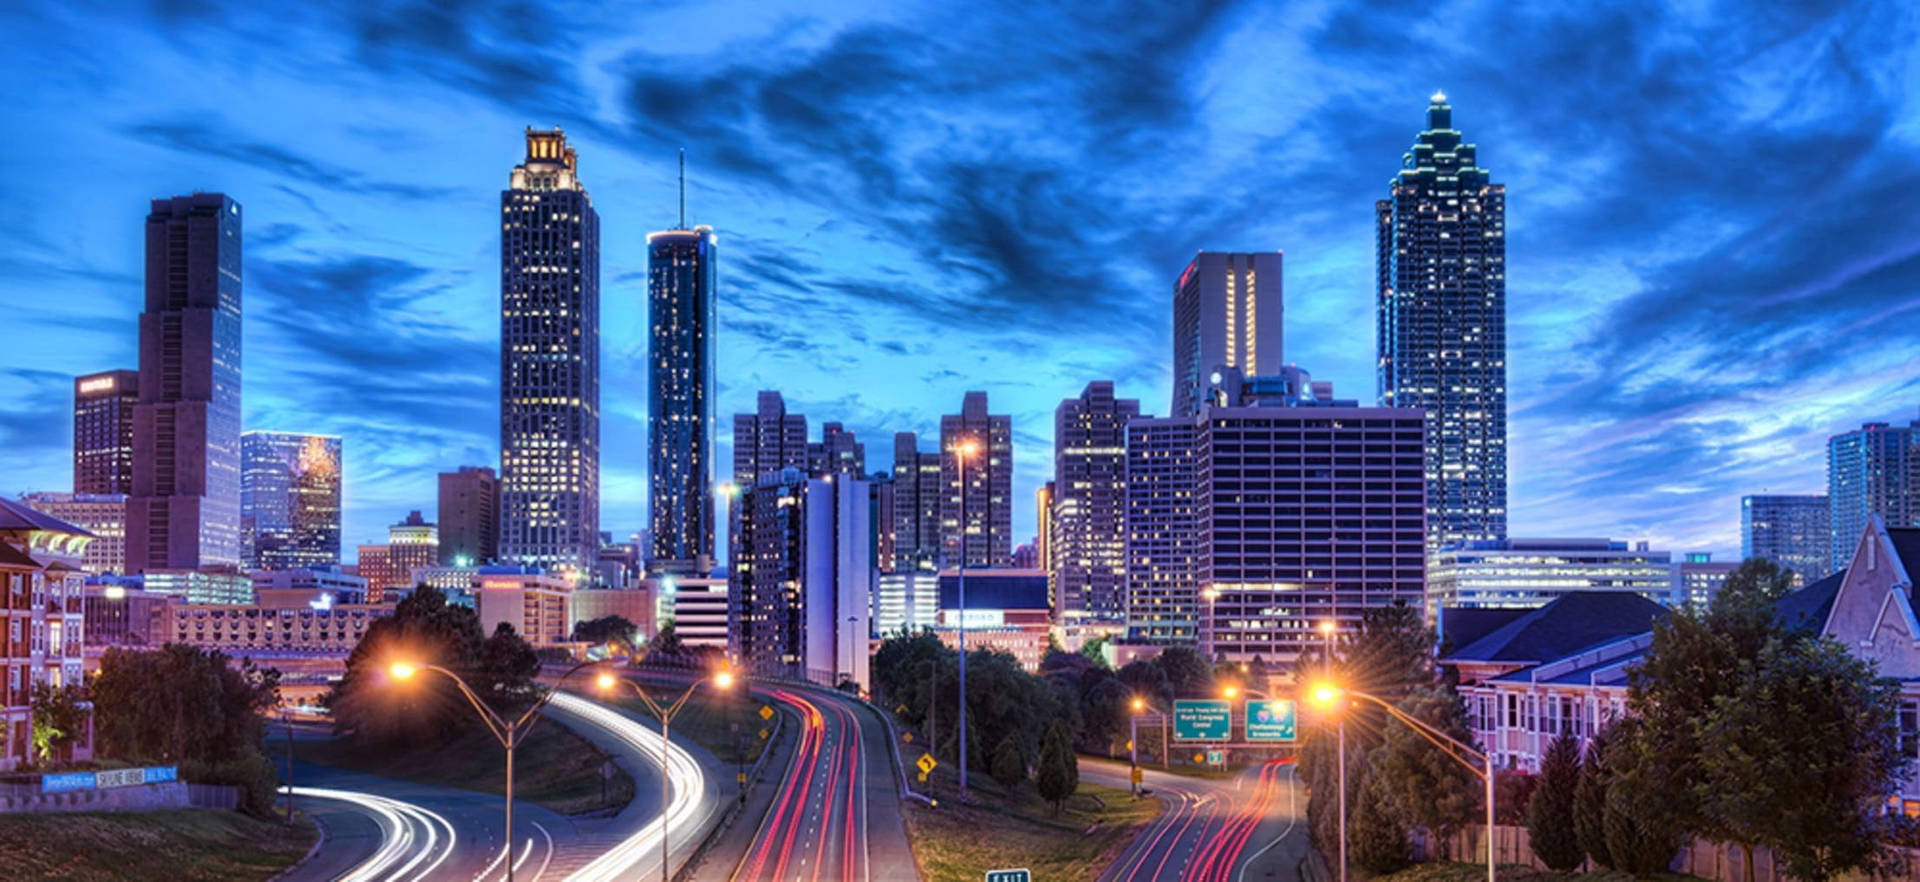 Atlanta Georgia City Lights Background